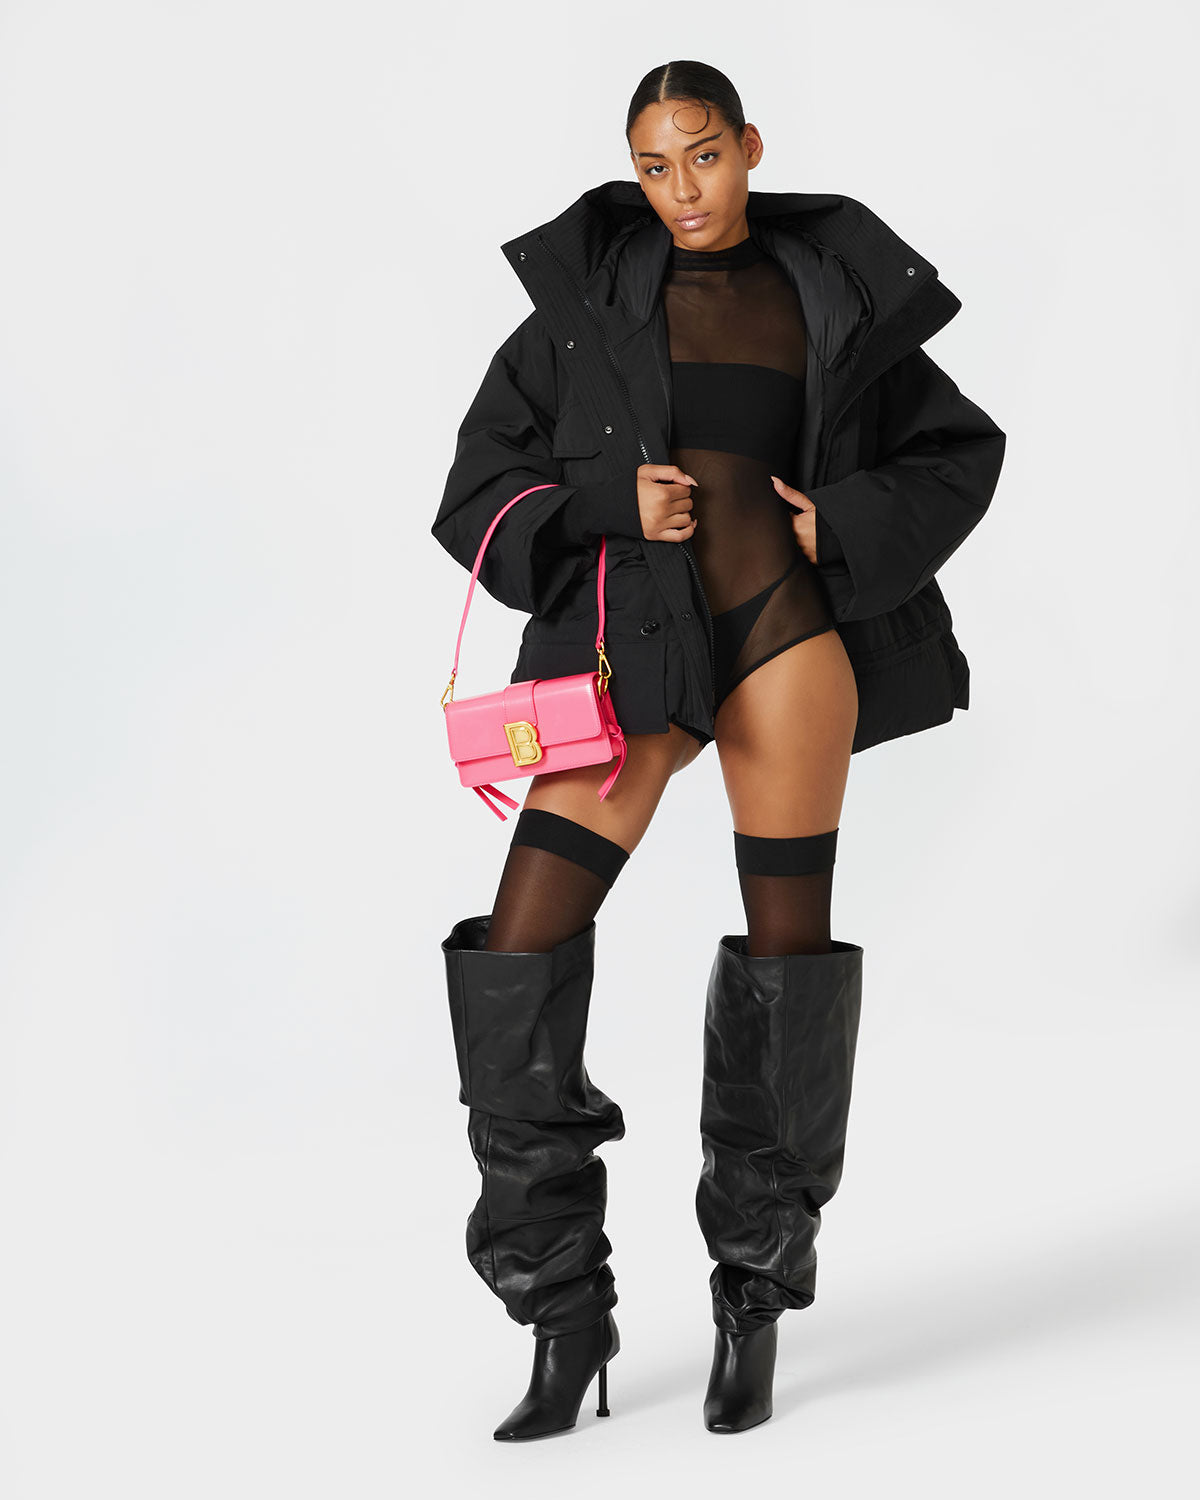 Brandon Blackwood New York - Medium Nia Bag - Pink/Hard Leather